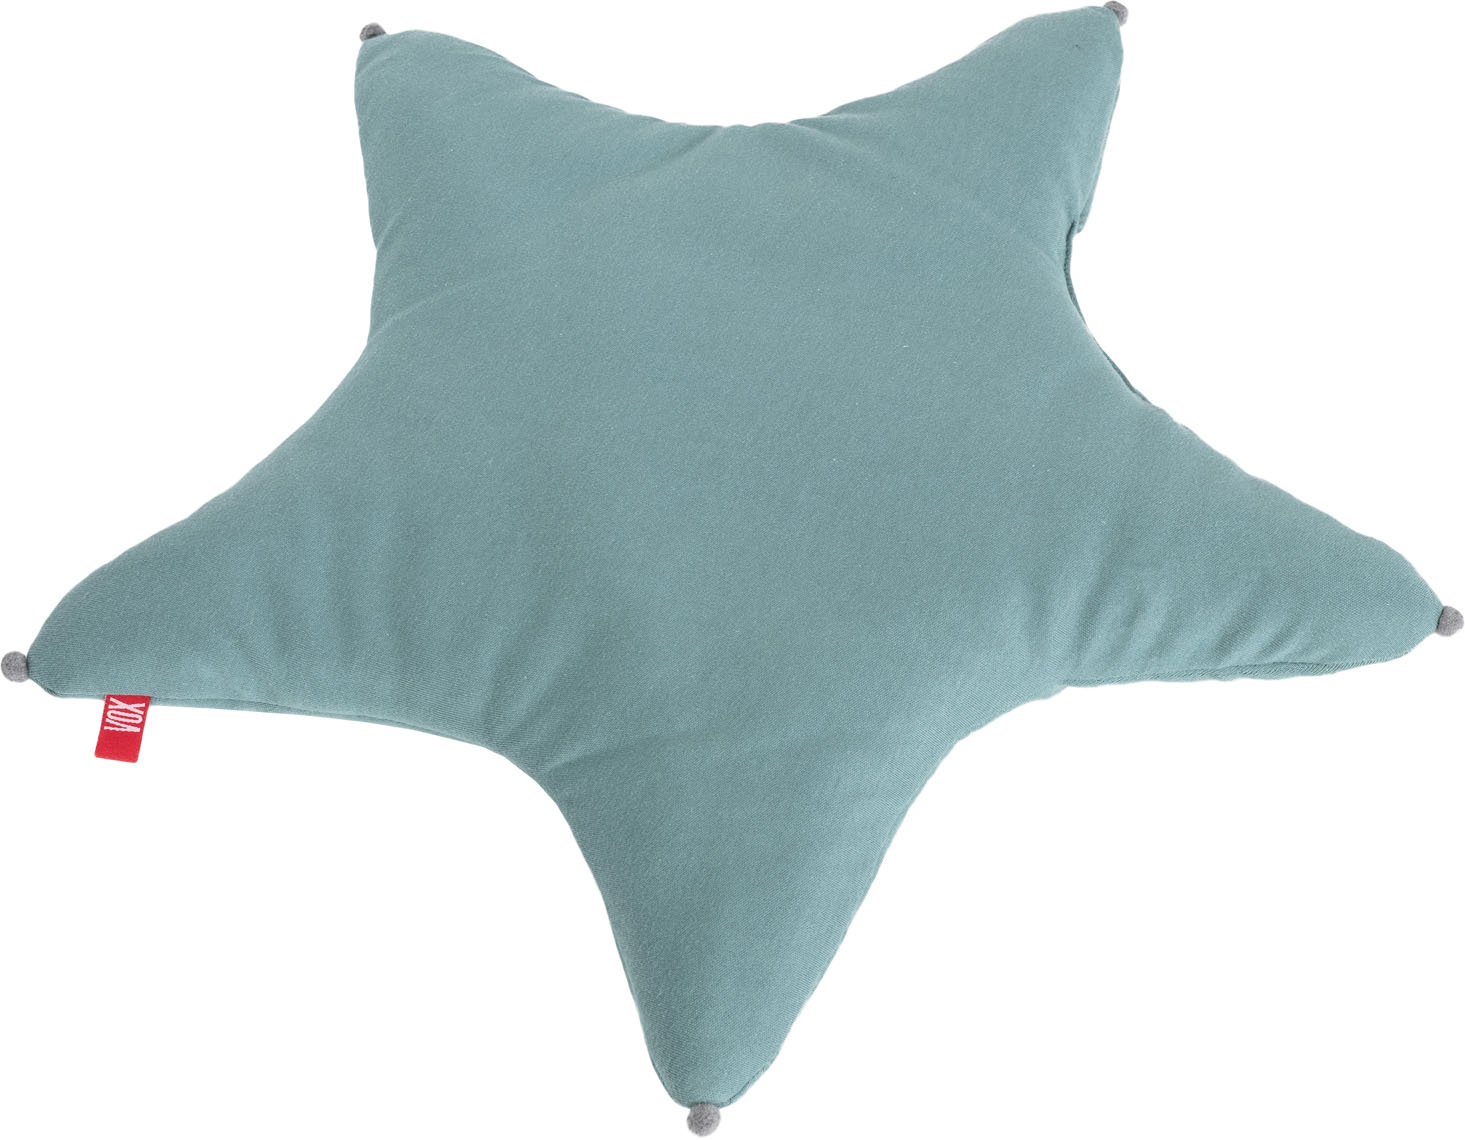 Pillow Star PURE mint